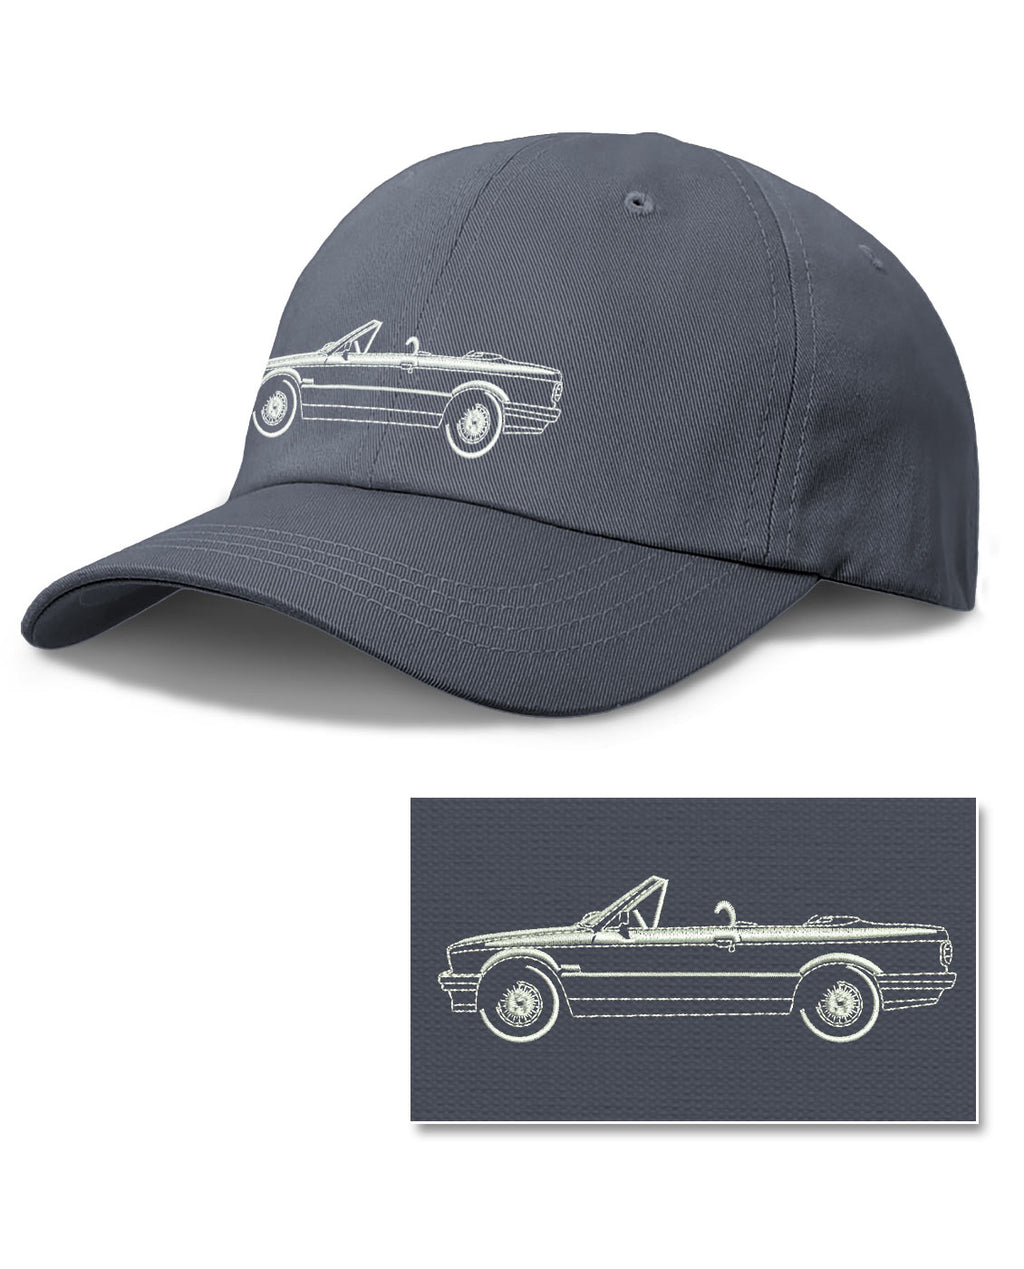 BMW 325i Convertible - Baseball Cap for Men & Women - Side View